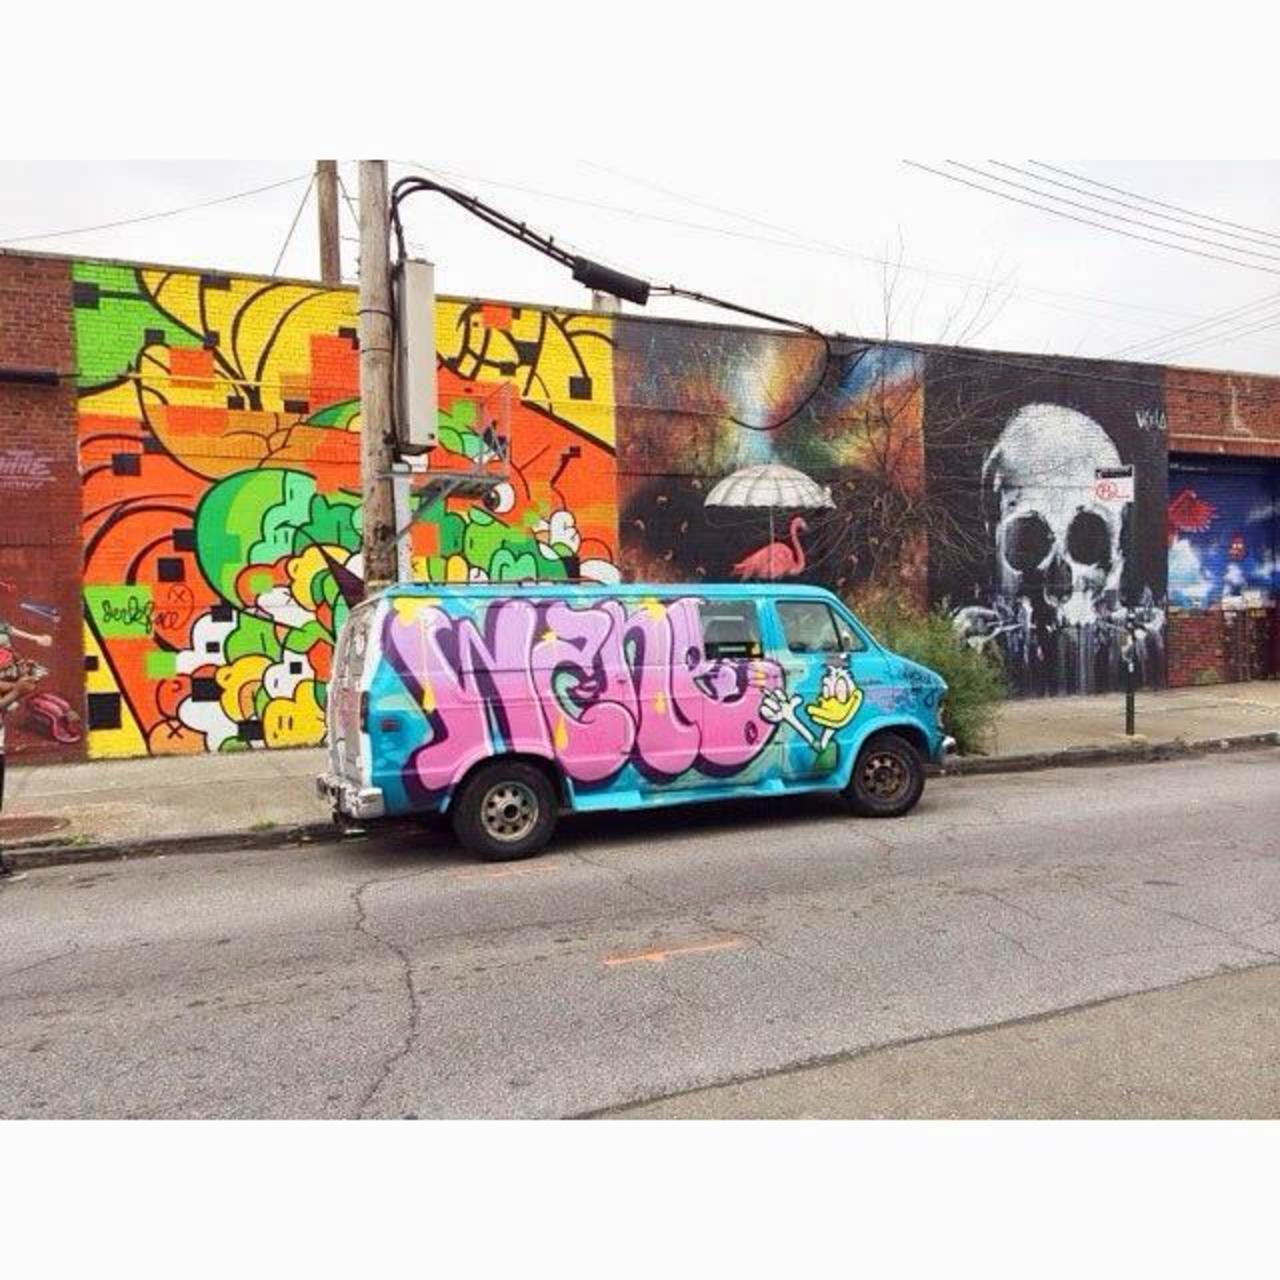 I saw this van in #brooklyn . Does anyone know of the #artist ? #streetart #graffiti http://t.co/6bJ6u3nSAf